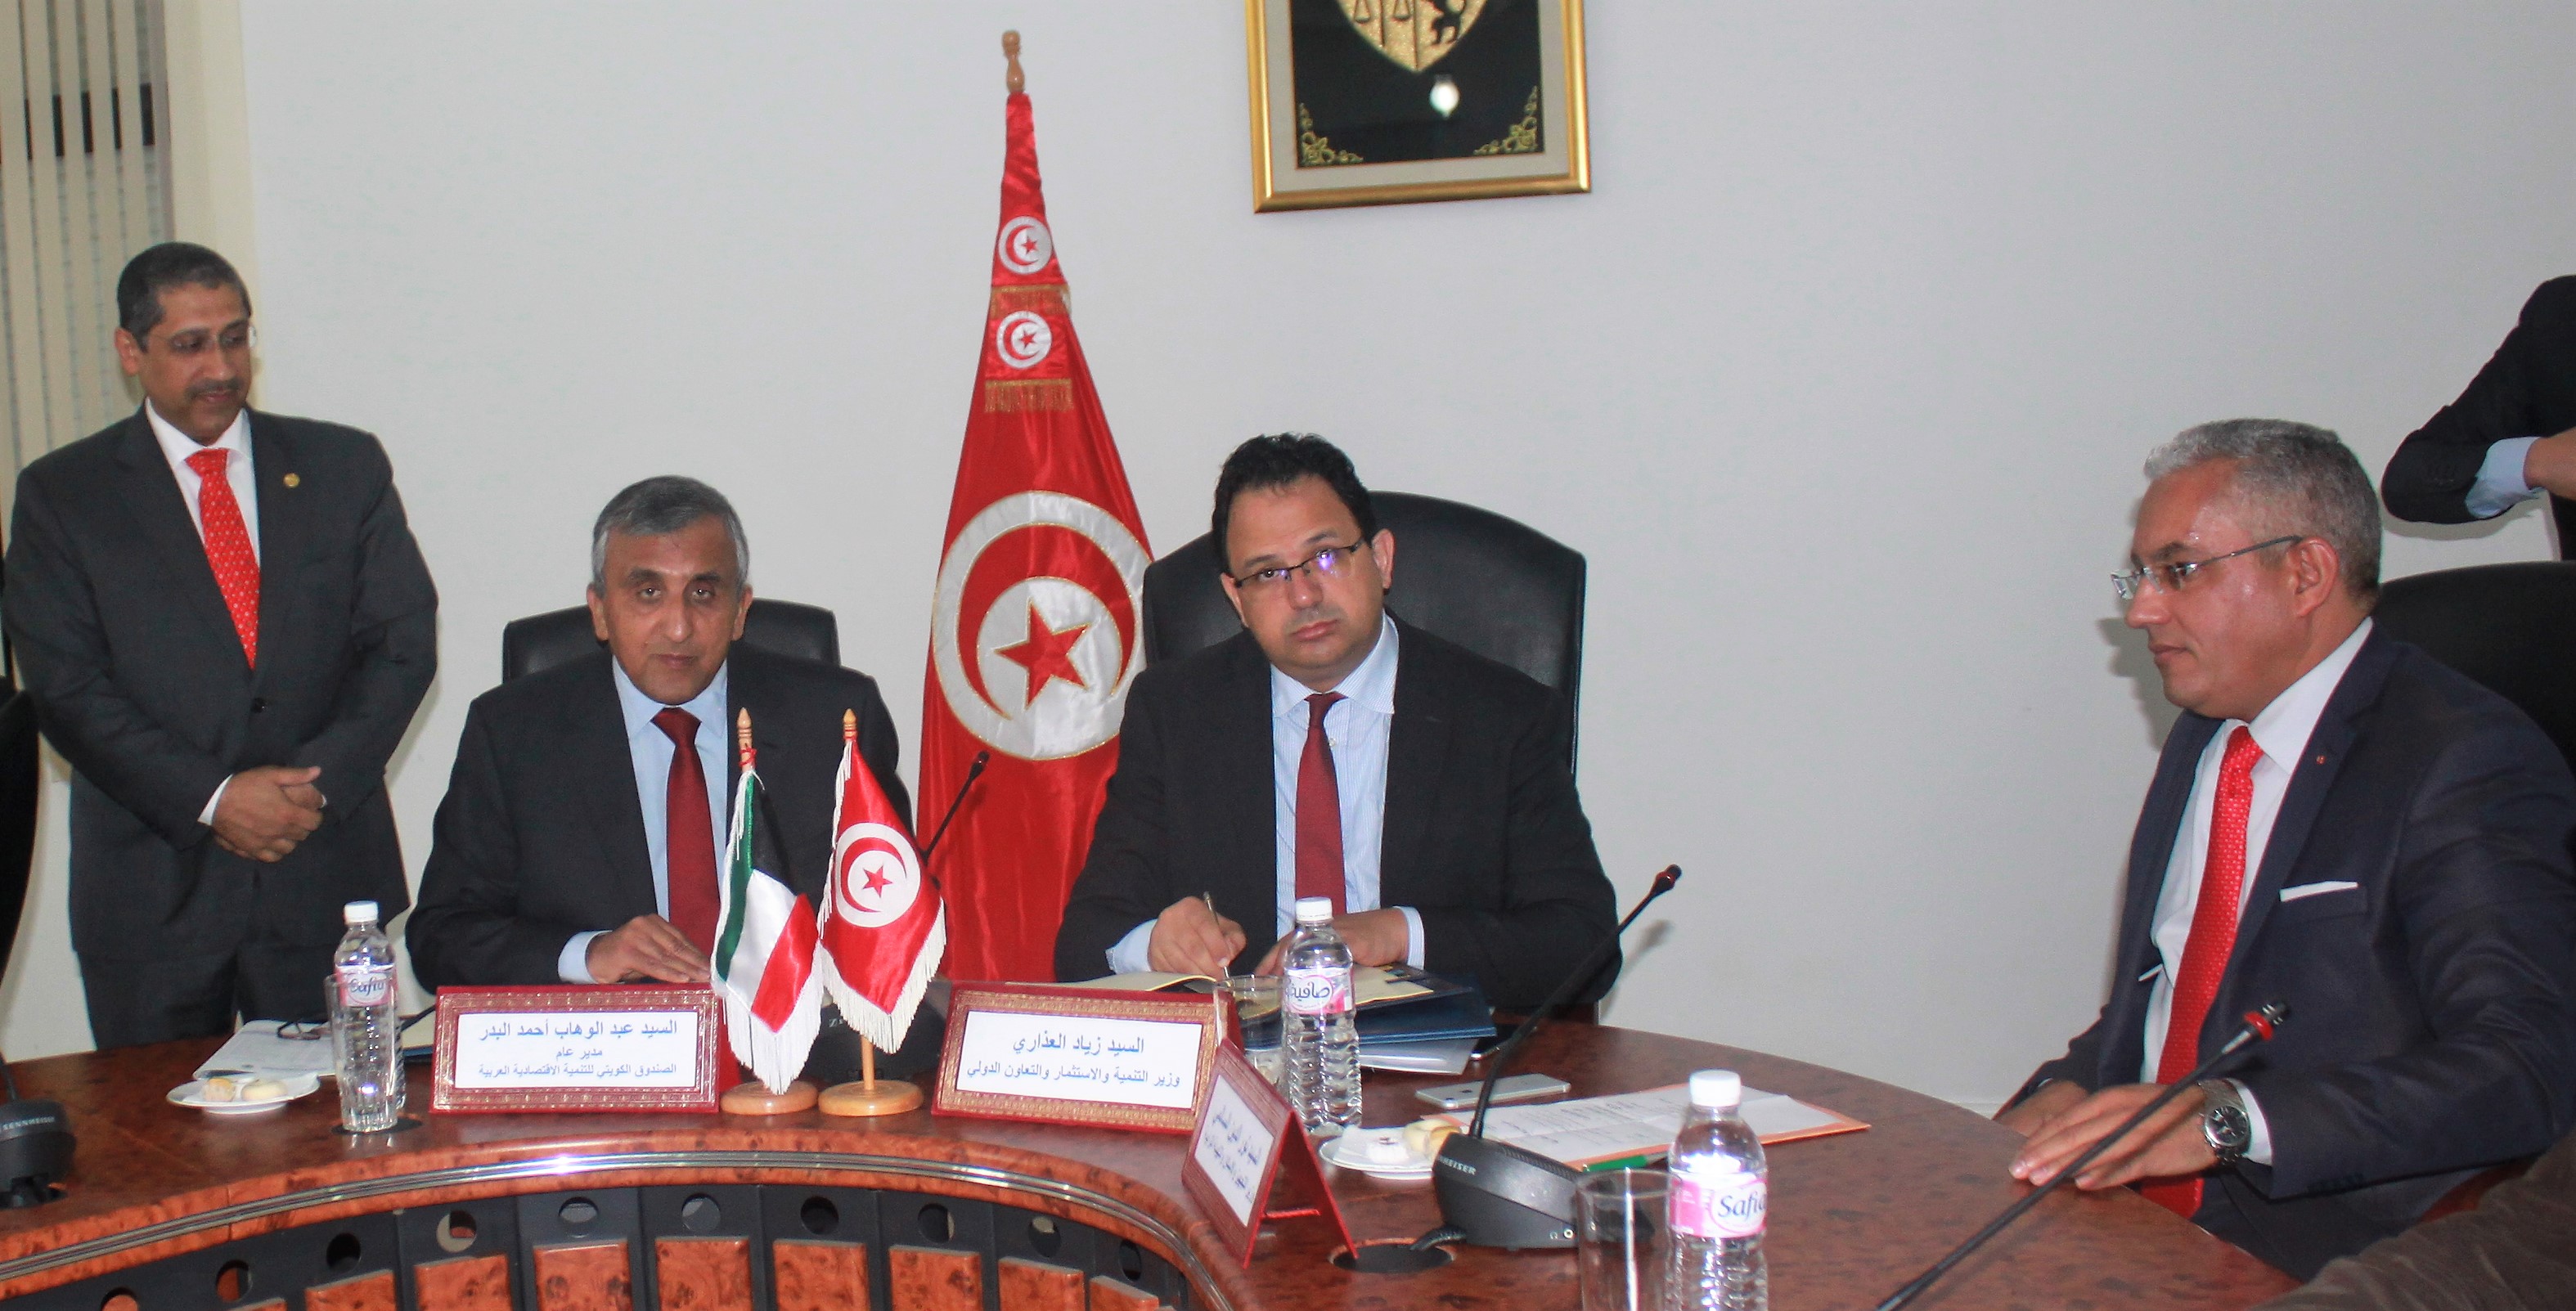 KFAED Director-General Abdulwahab Al-Bader with Tunisia's Minister of Development Zied Laadhari